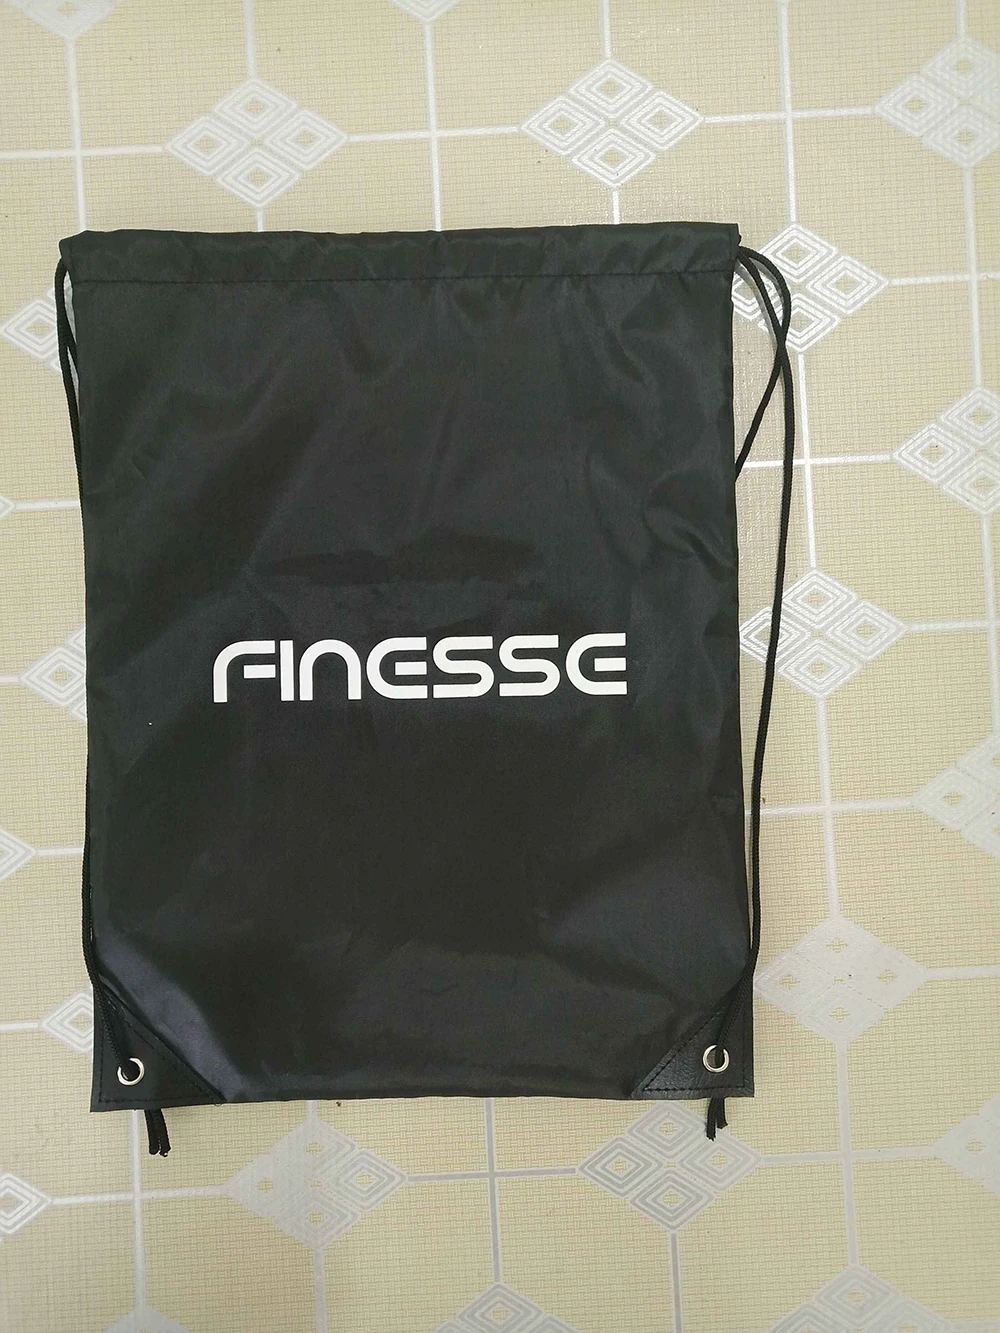 Professional Draw String Sack Pack With Logo Designer Drawstring Bags ...